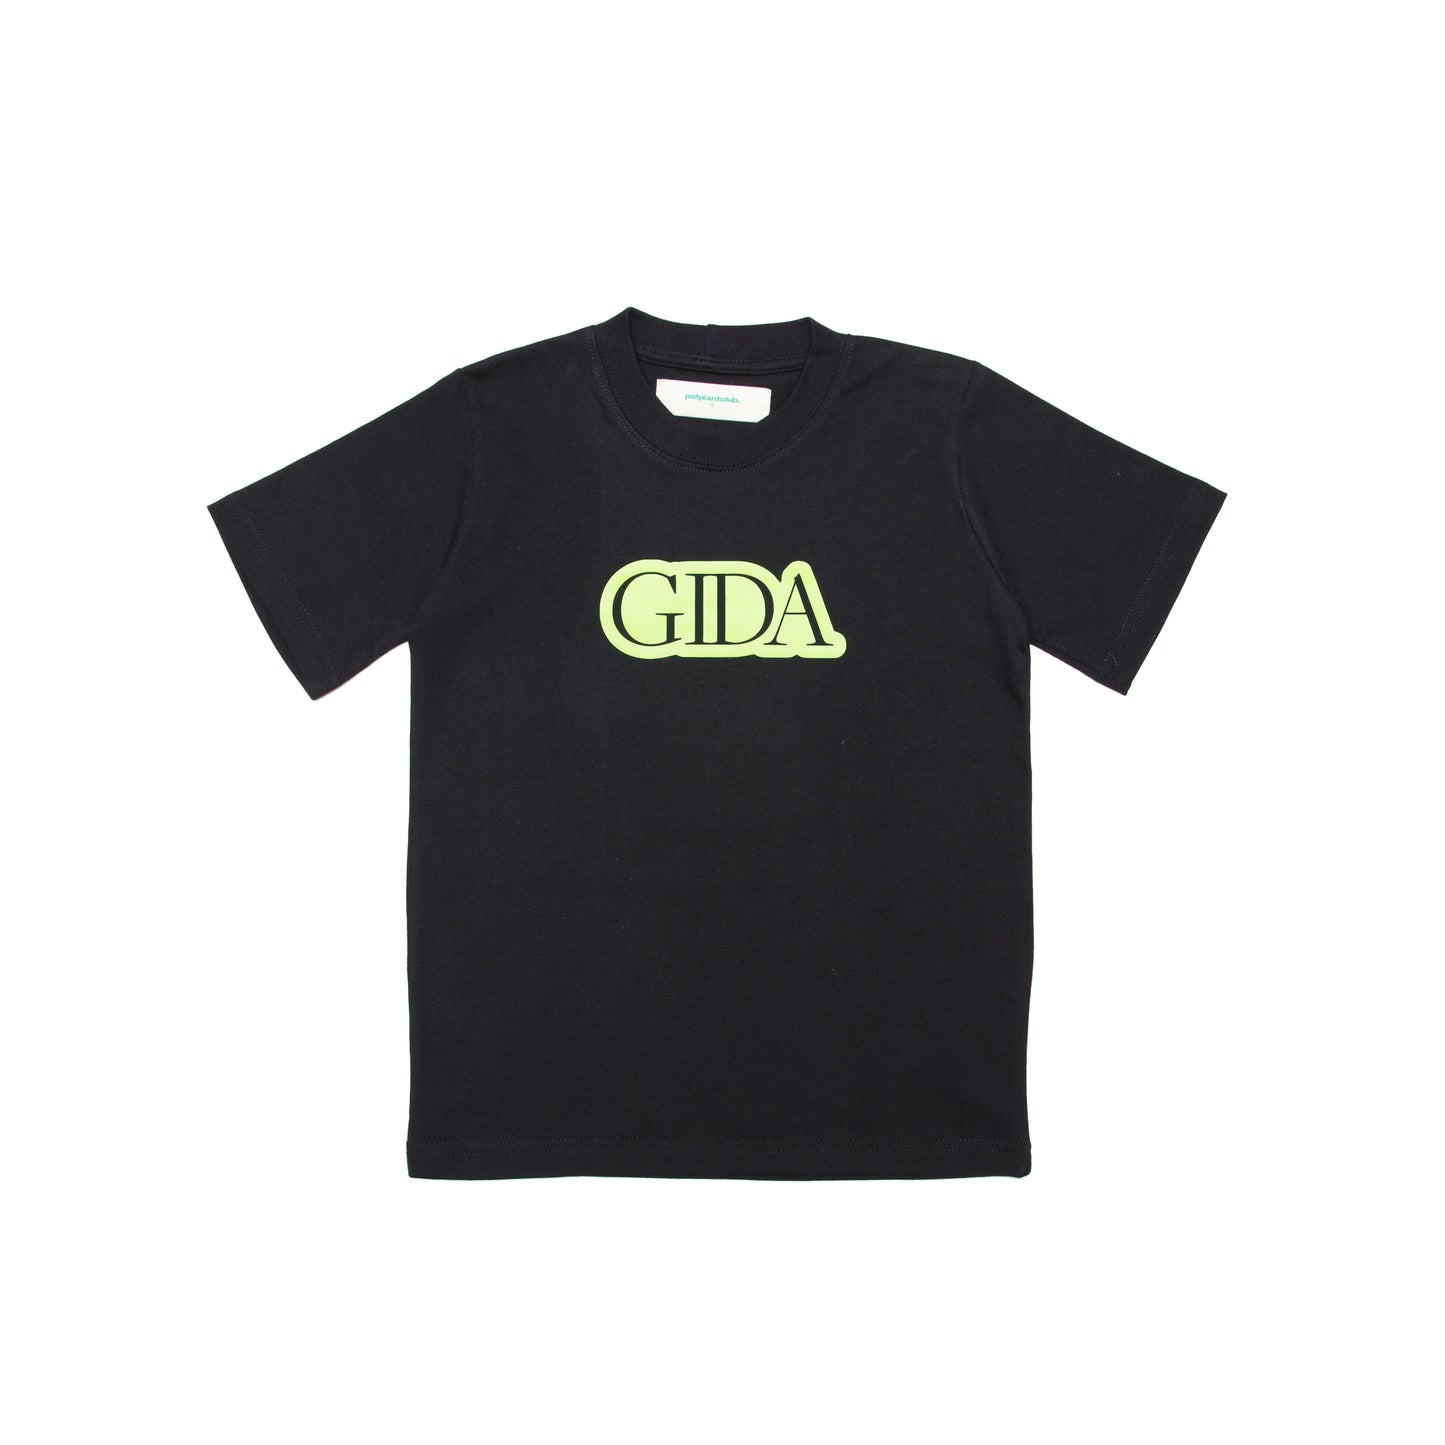 Gida "Green" Baby T-shirt - Black